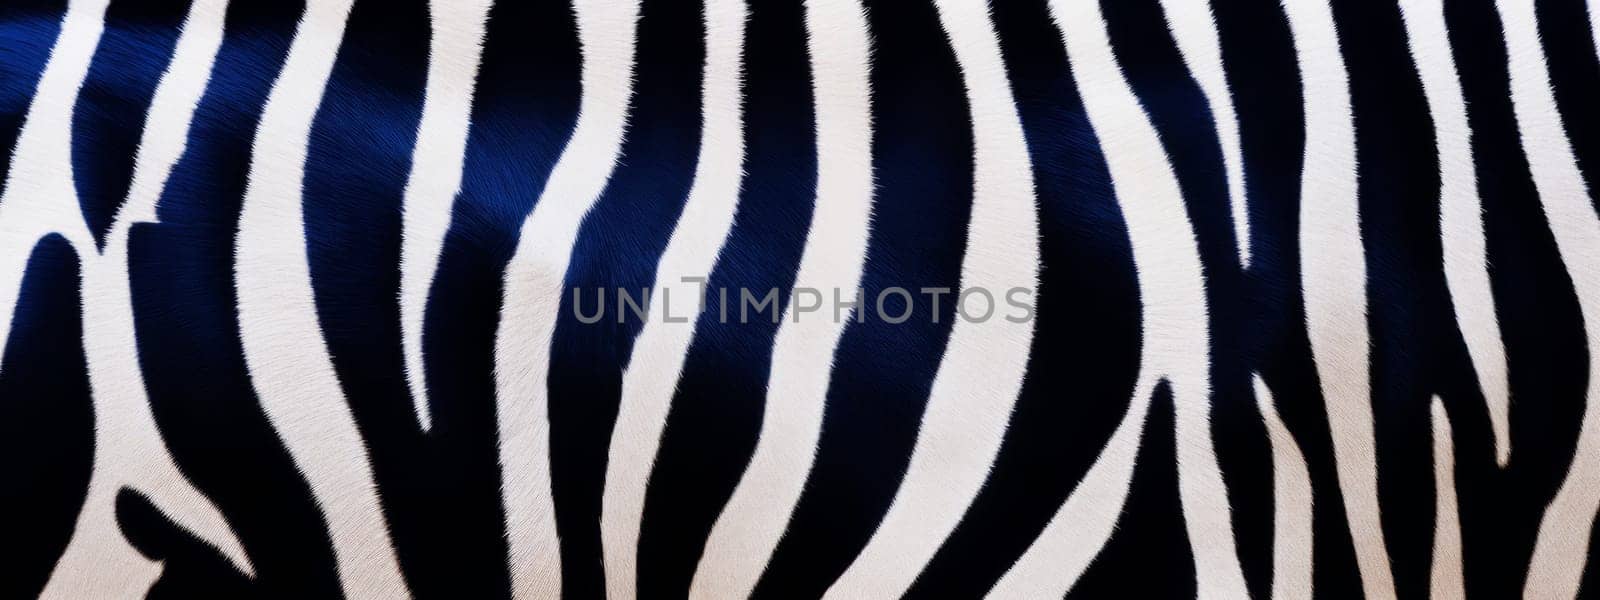 Zebra seamless pattern background. Animal skin texture in retro fashion style